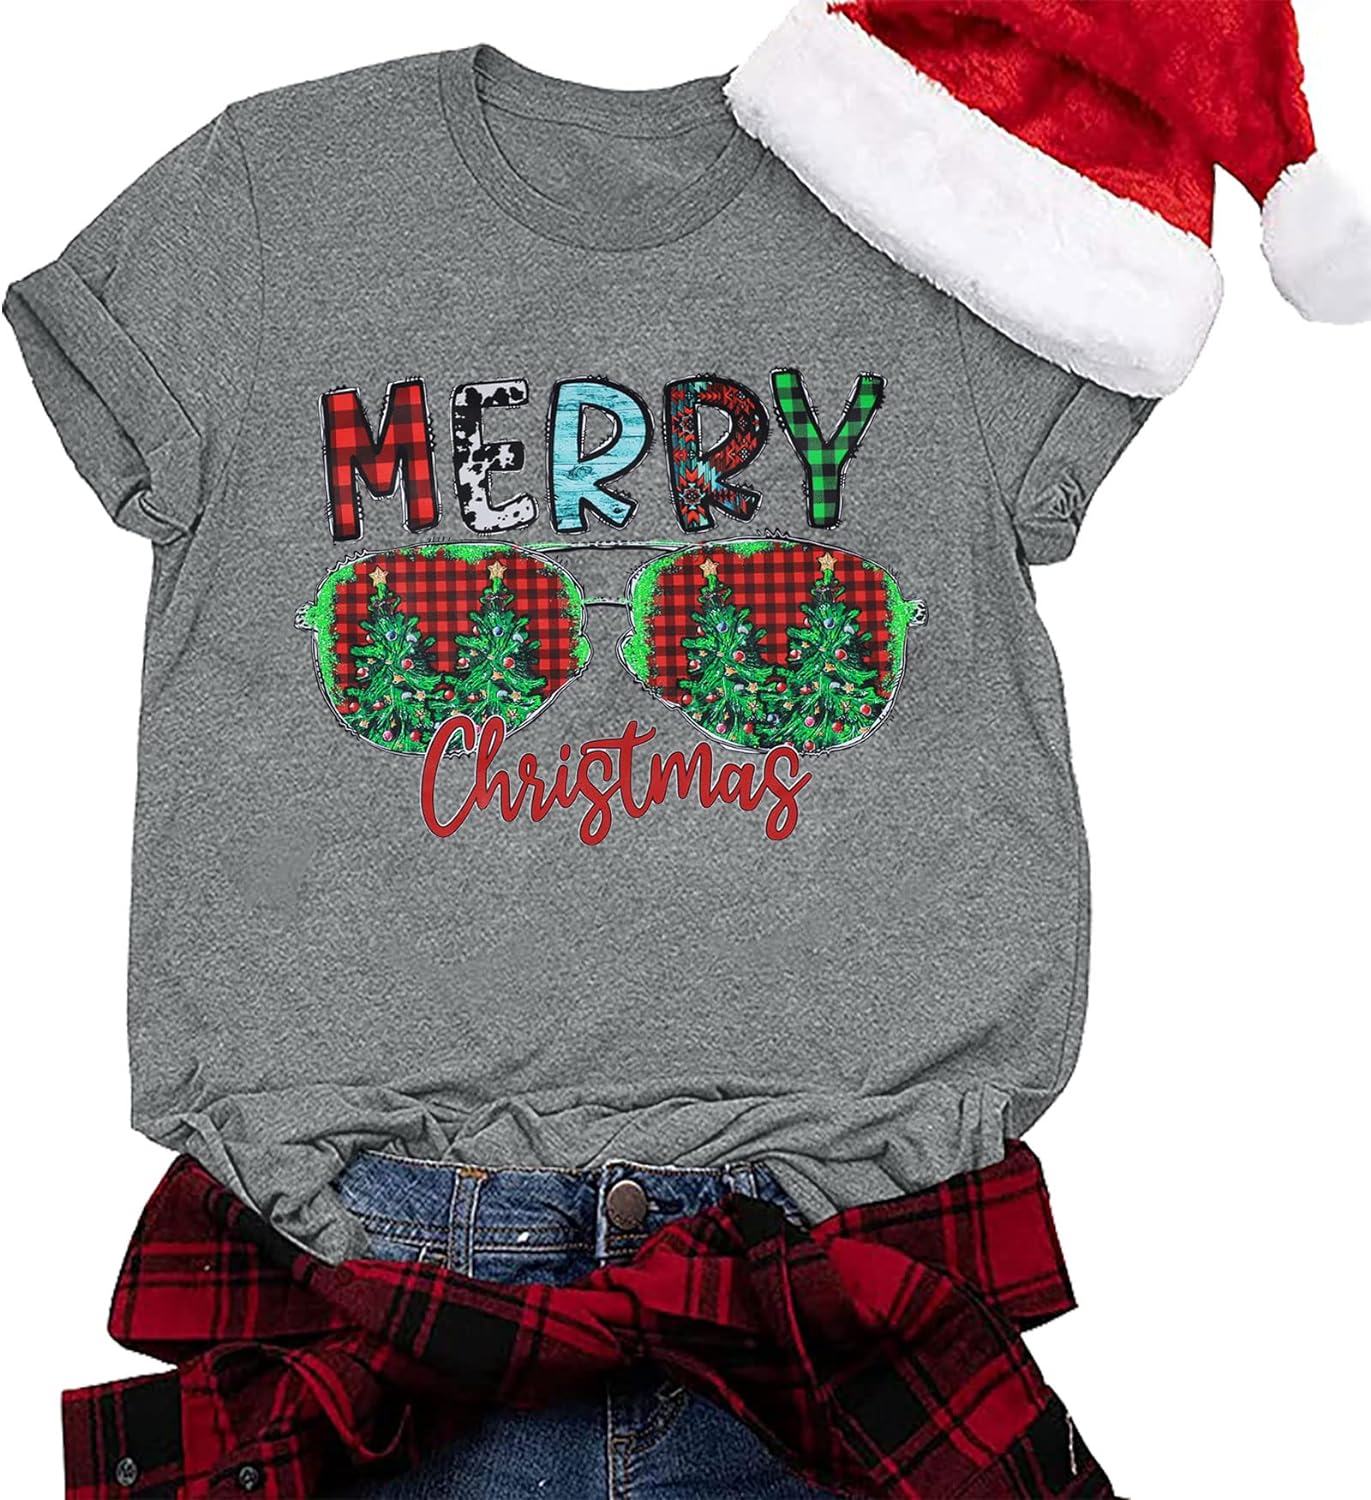 ALLTB Santa We Good Shirt Women Merry Christmas Tshirt Cute Santa Shirt Blouse Casual Holiday Xmas Tee Tops (Grey, Large)